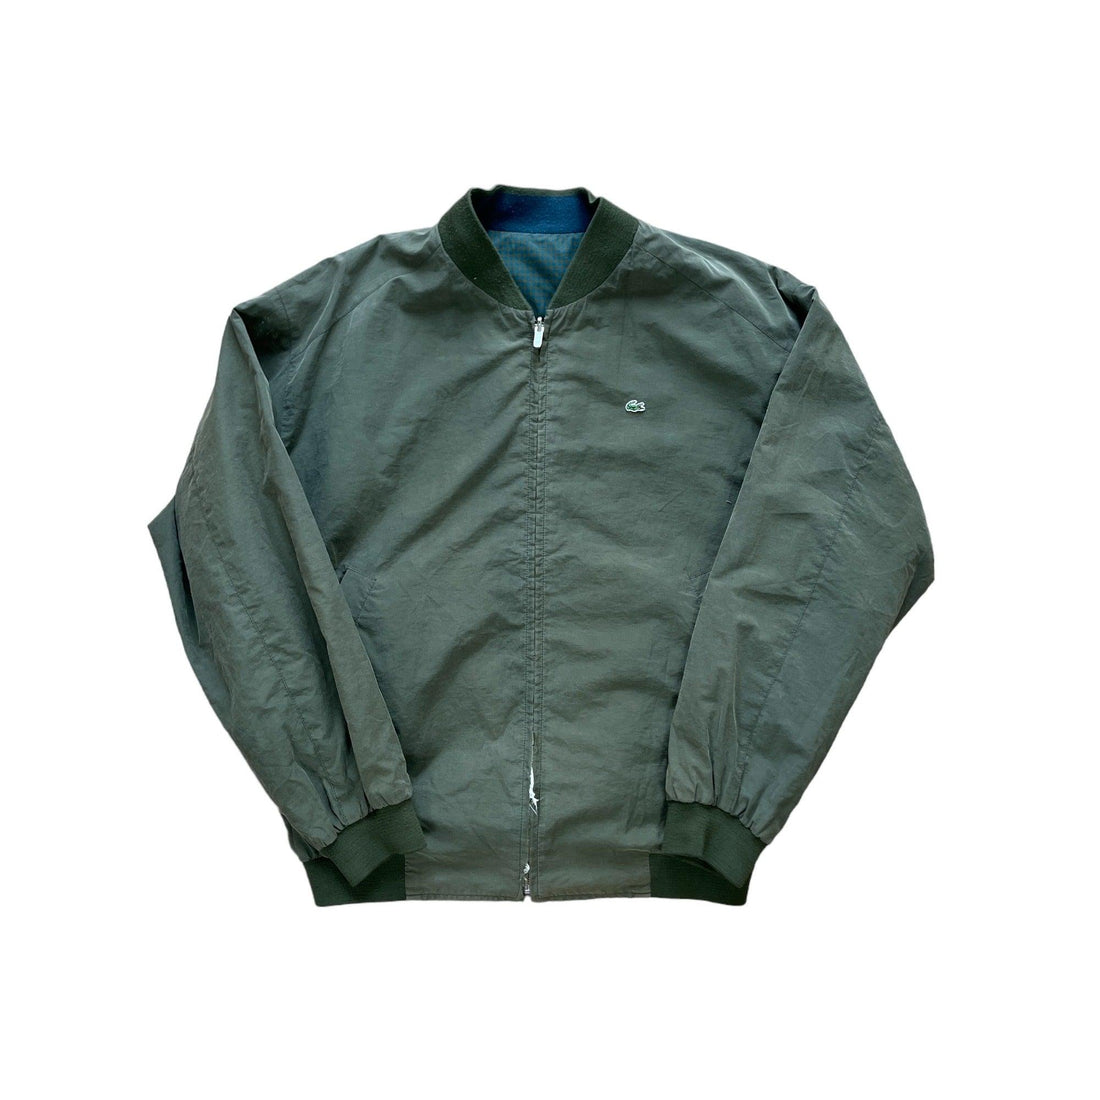 Vintage 90s Green Lacoste Reversible Bomber Jacket - Medium - The Streetwear Studio